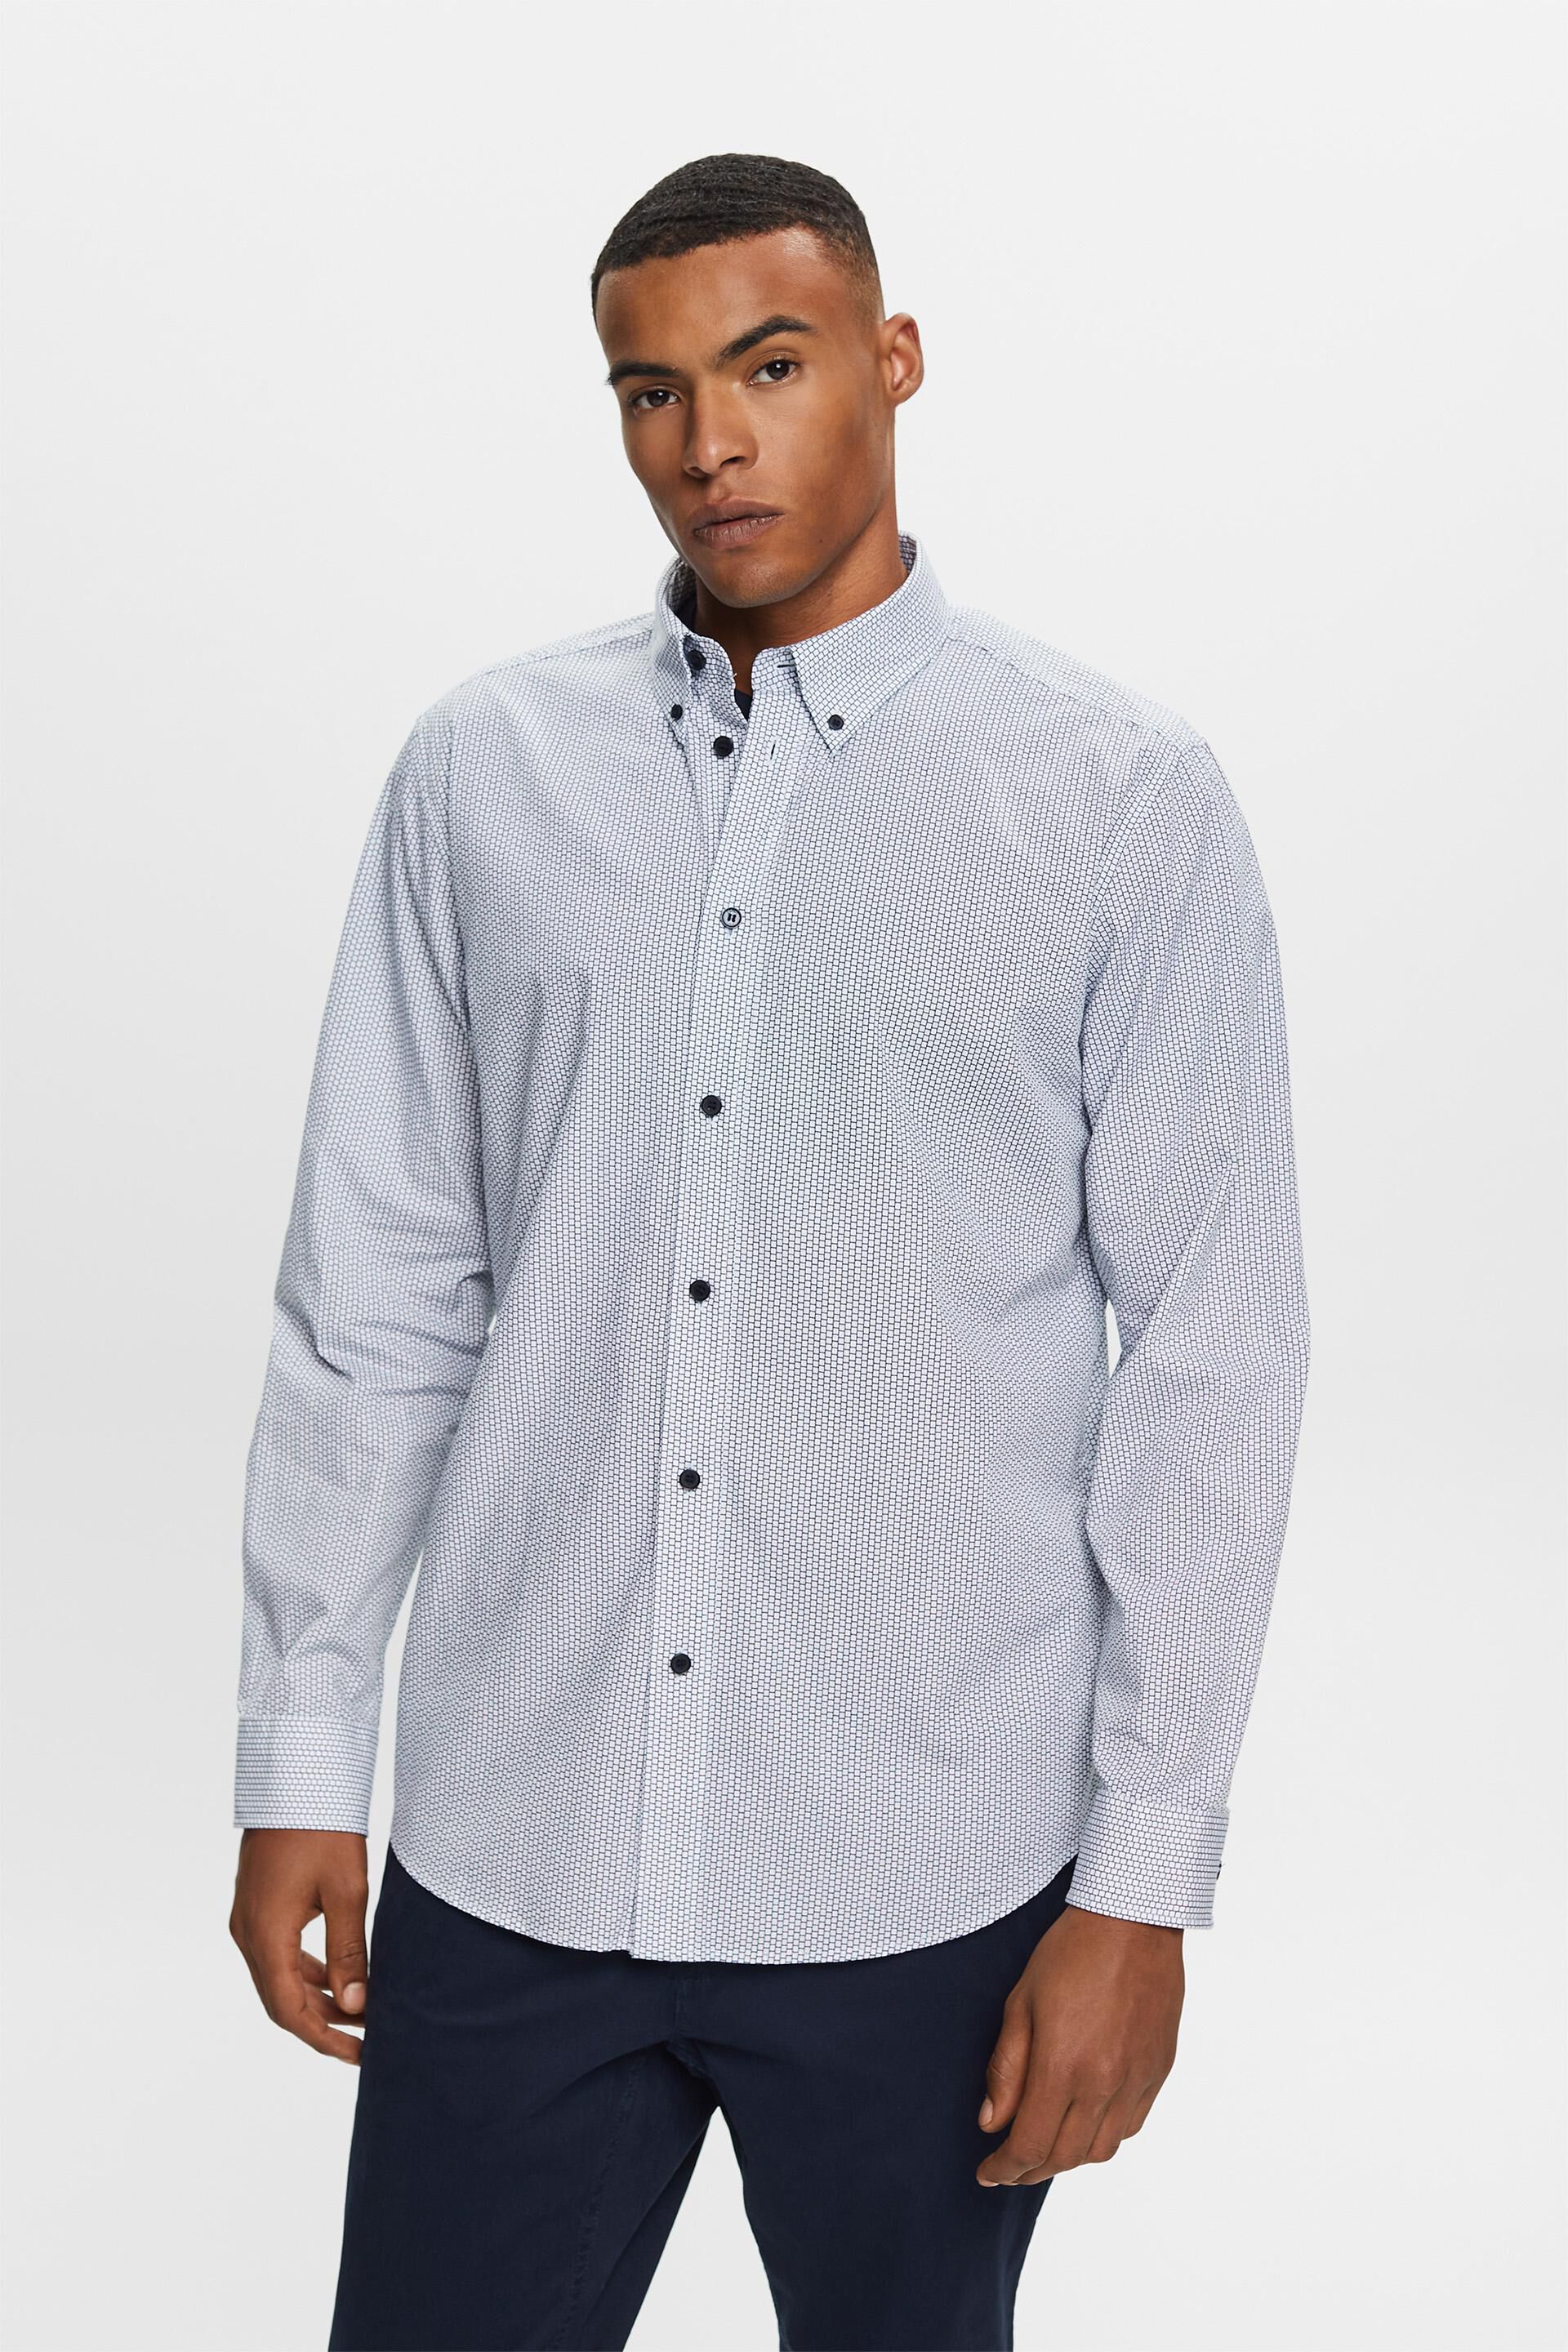 Esprit Cotton Poplin Shirt